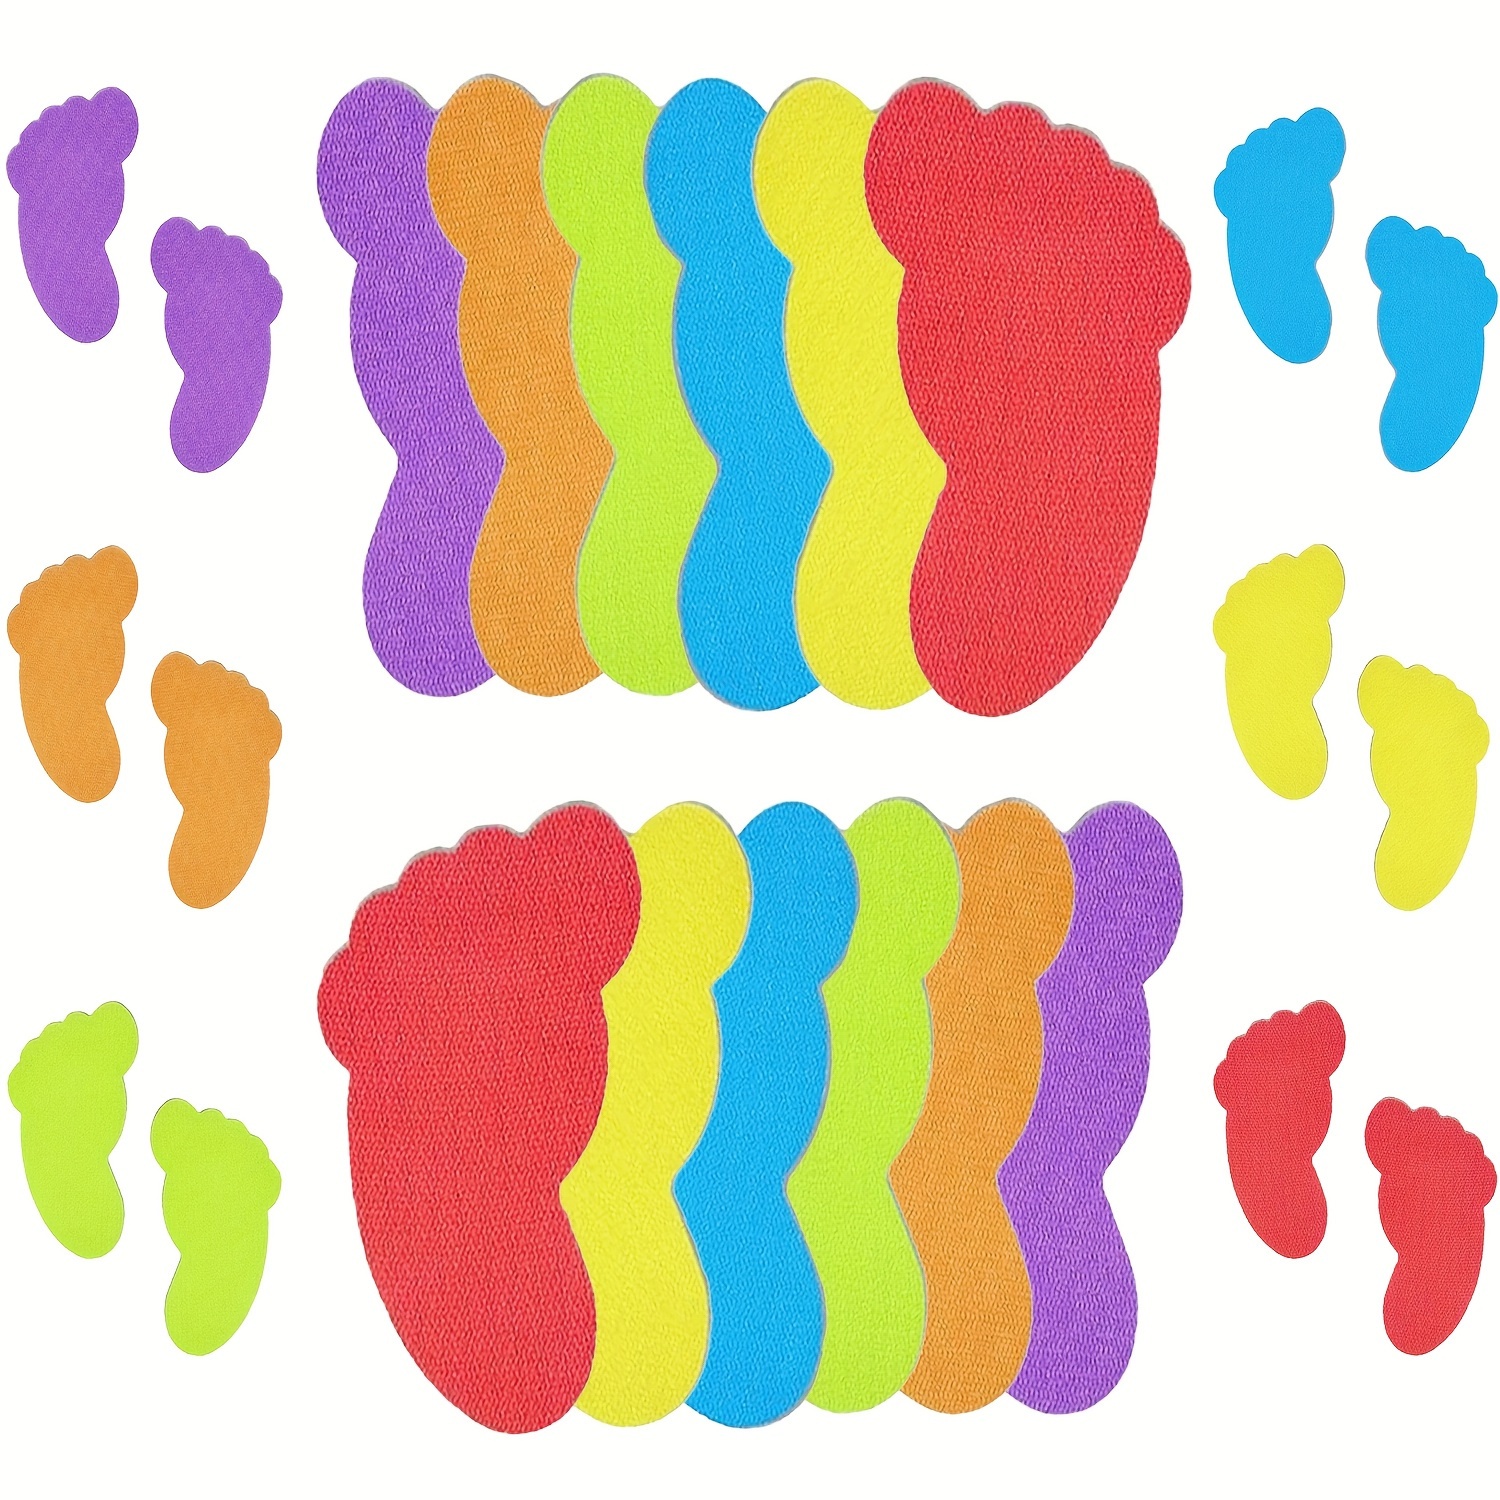 Multi-Color Floor Spot Markers for Kids